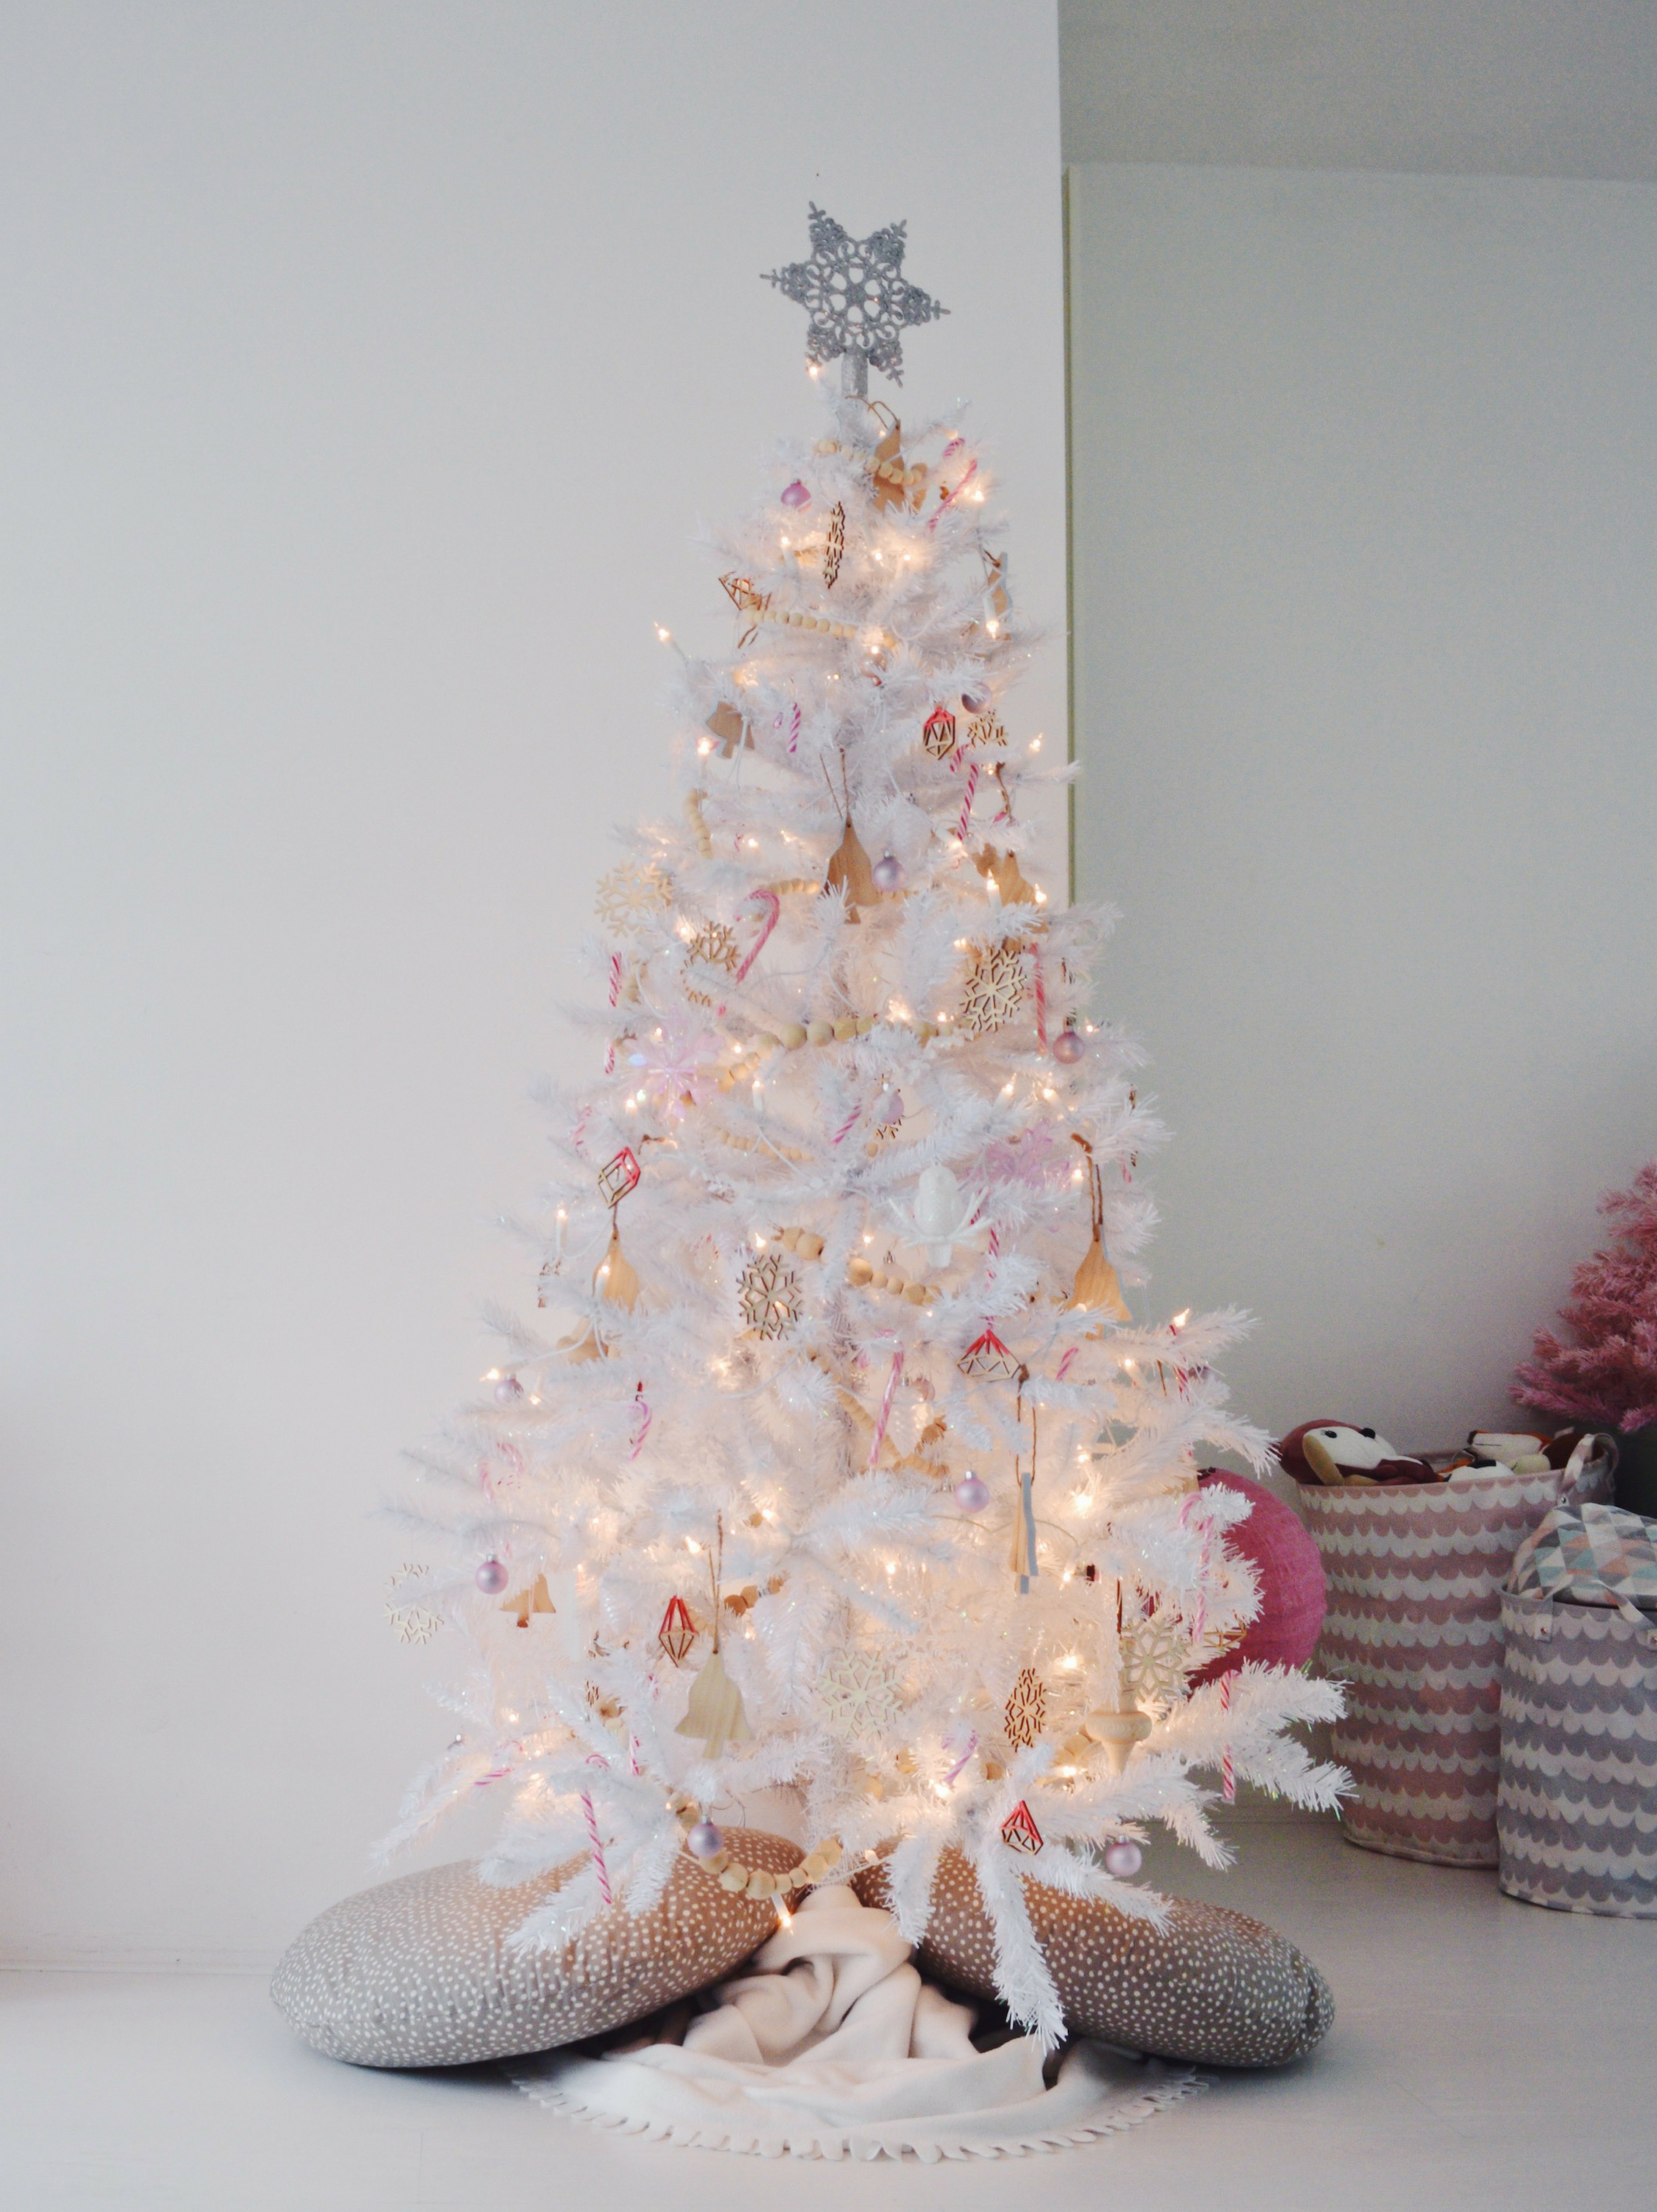 Onze witte kerstboom 2018: warm wit met hout en roze | mamalifestyle.nl